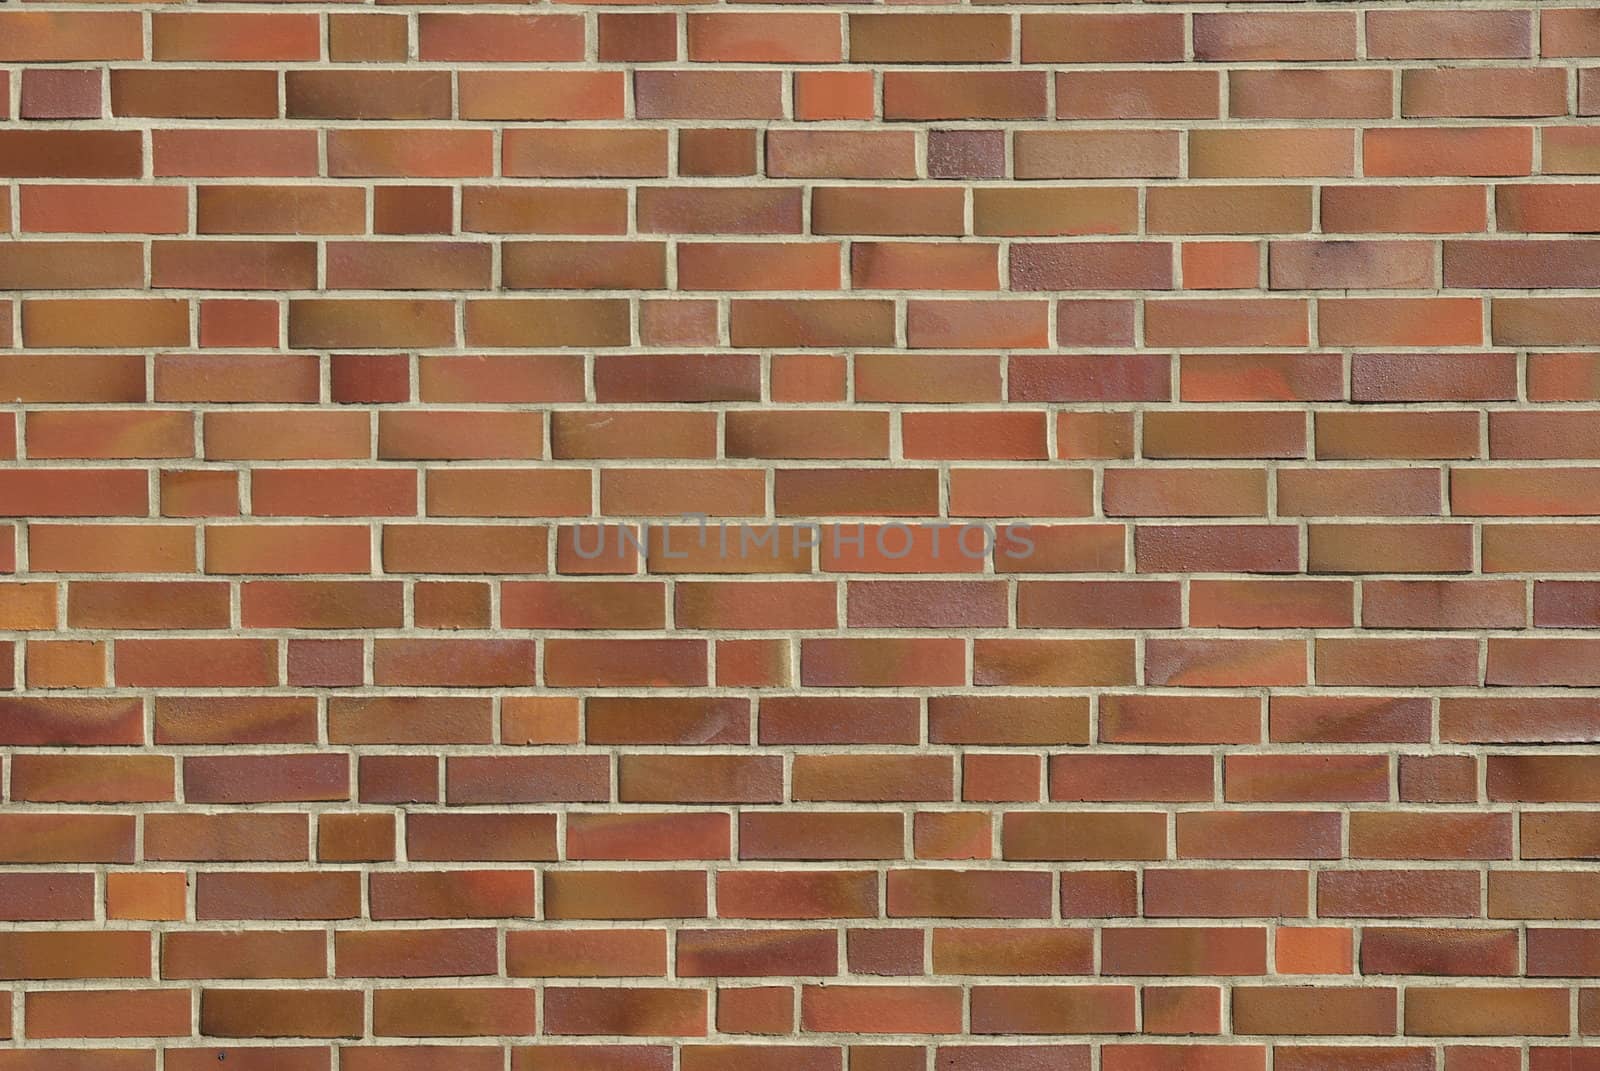 Brick wall without image